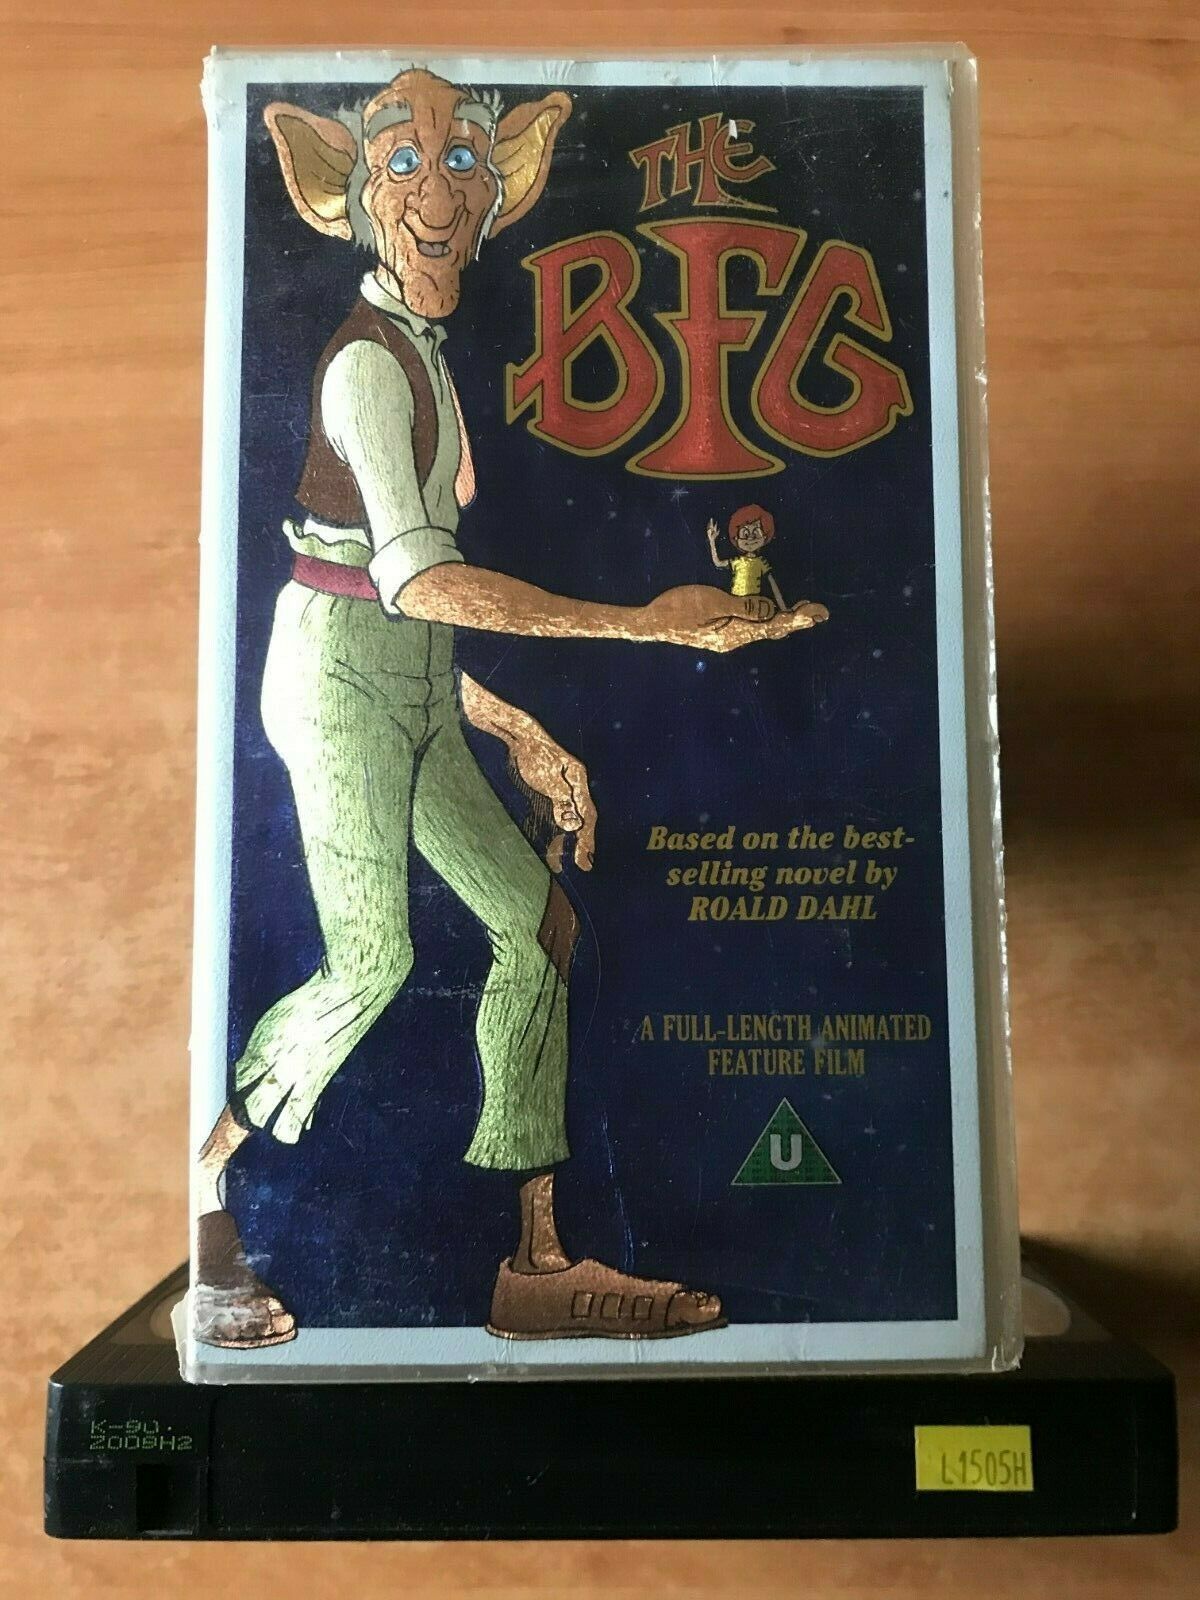 The BFG: Big Friendly Giant [Thames Video]; Roald Dahl - Animated - Kids - VHS-